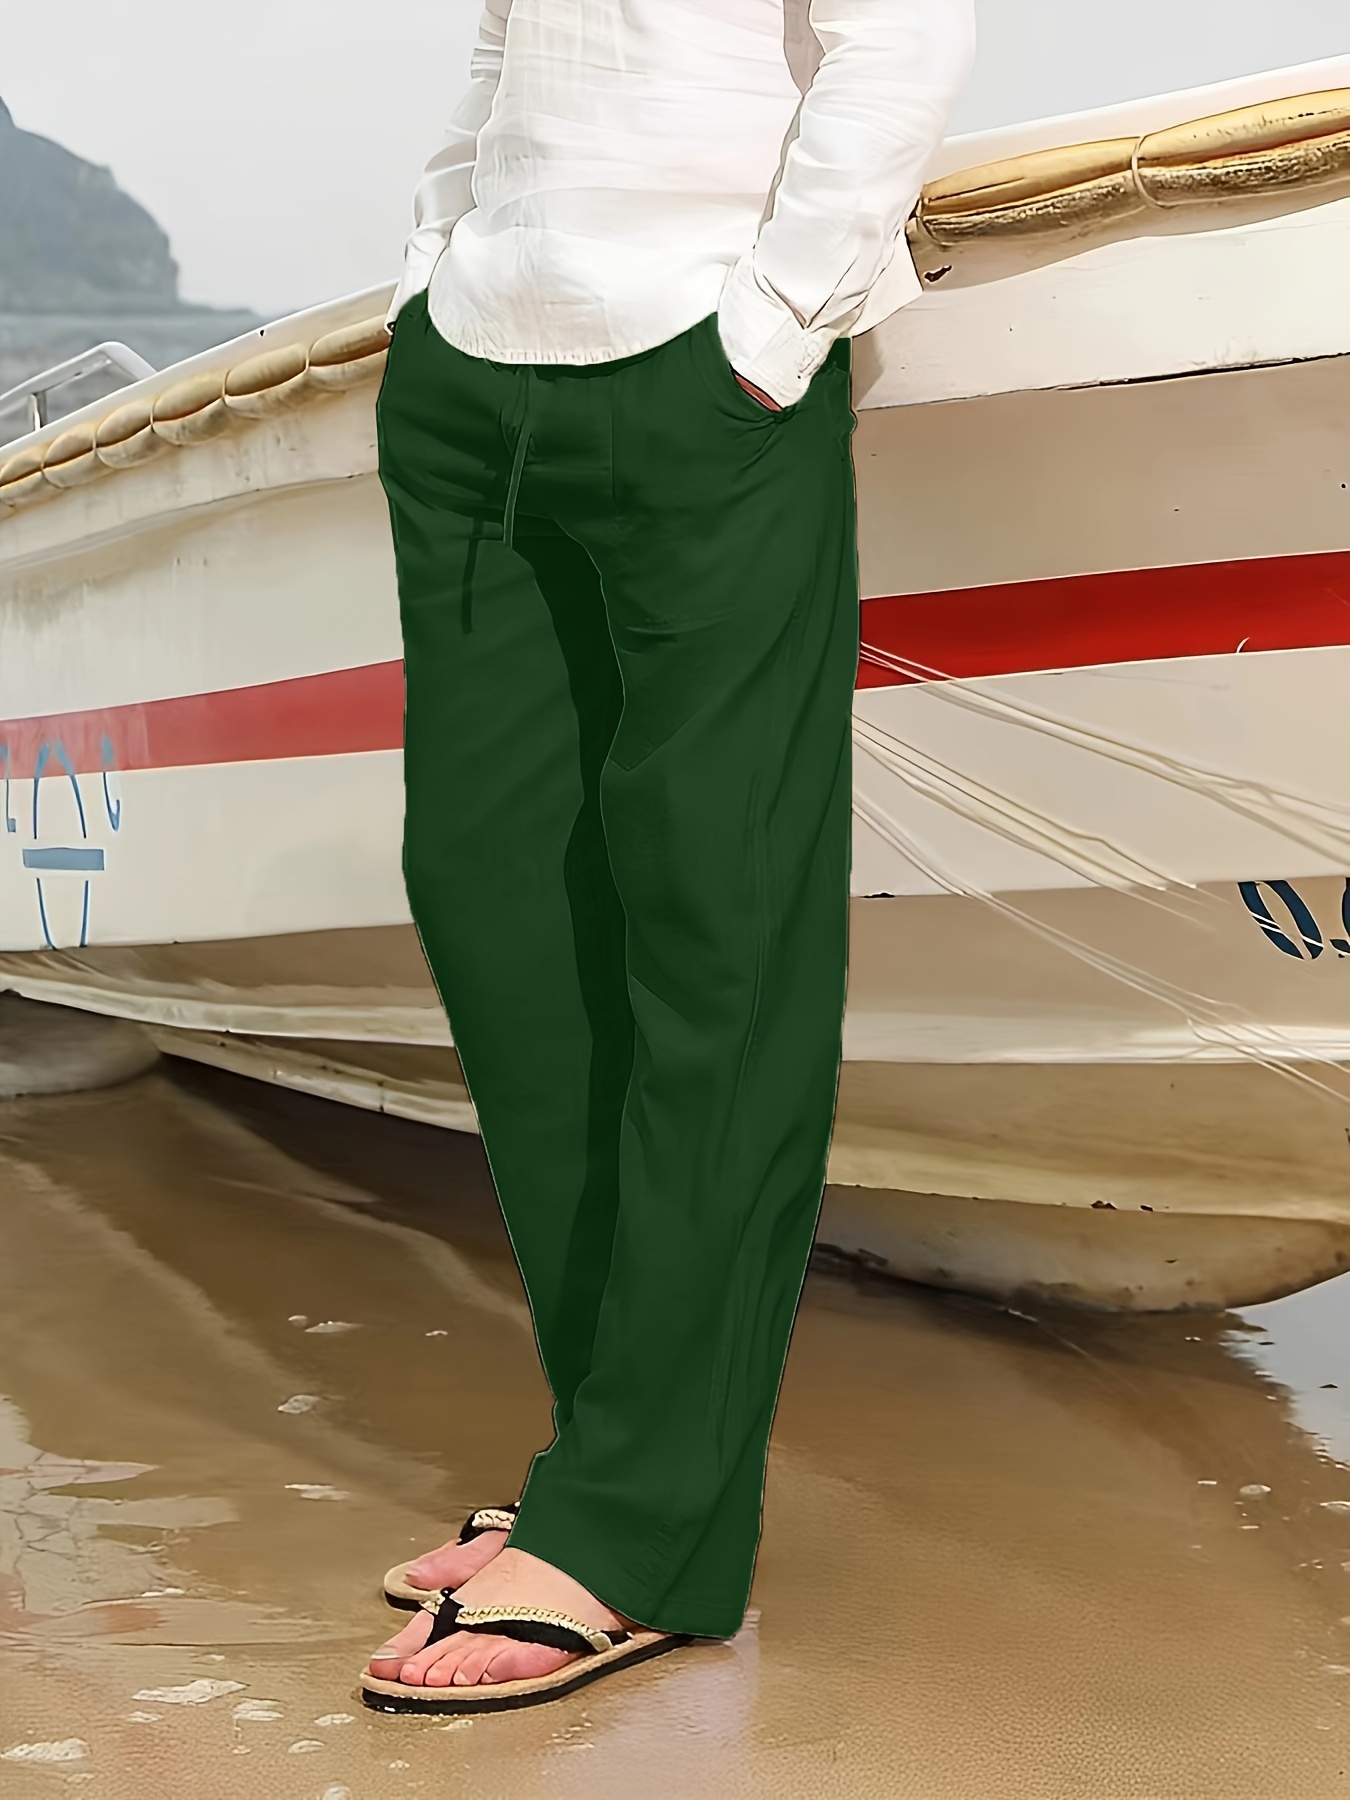 Pantalones Hombre, Pantalón Algodón Lino Verde